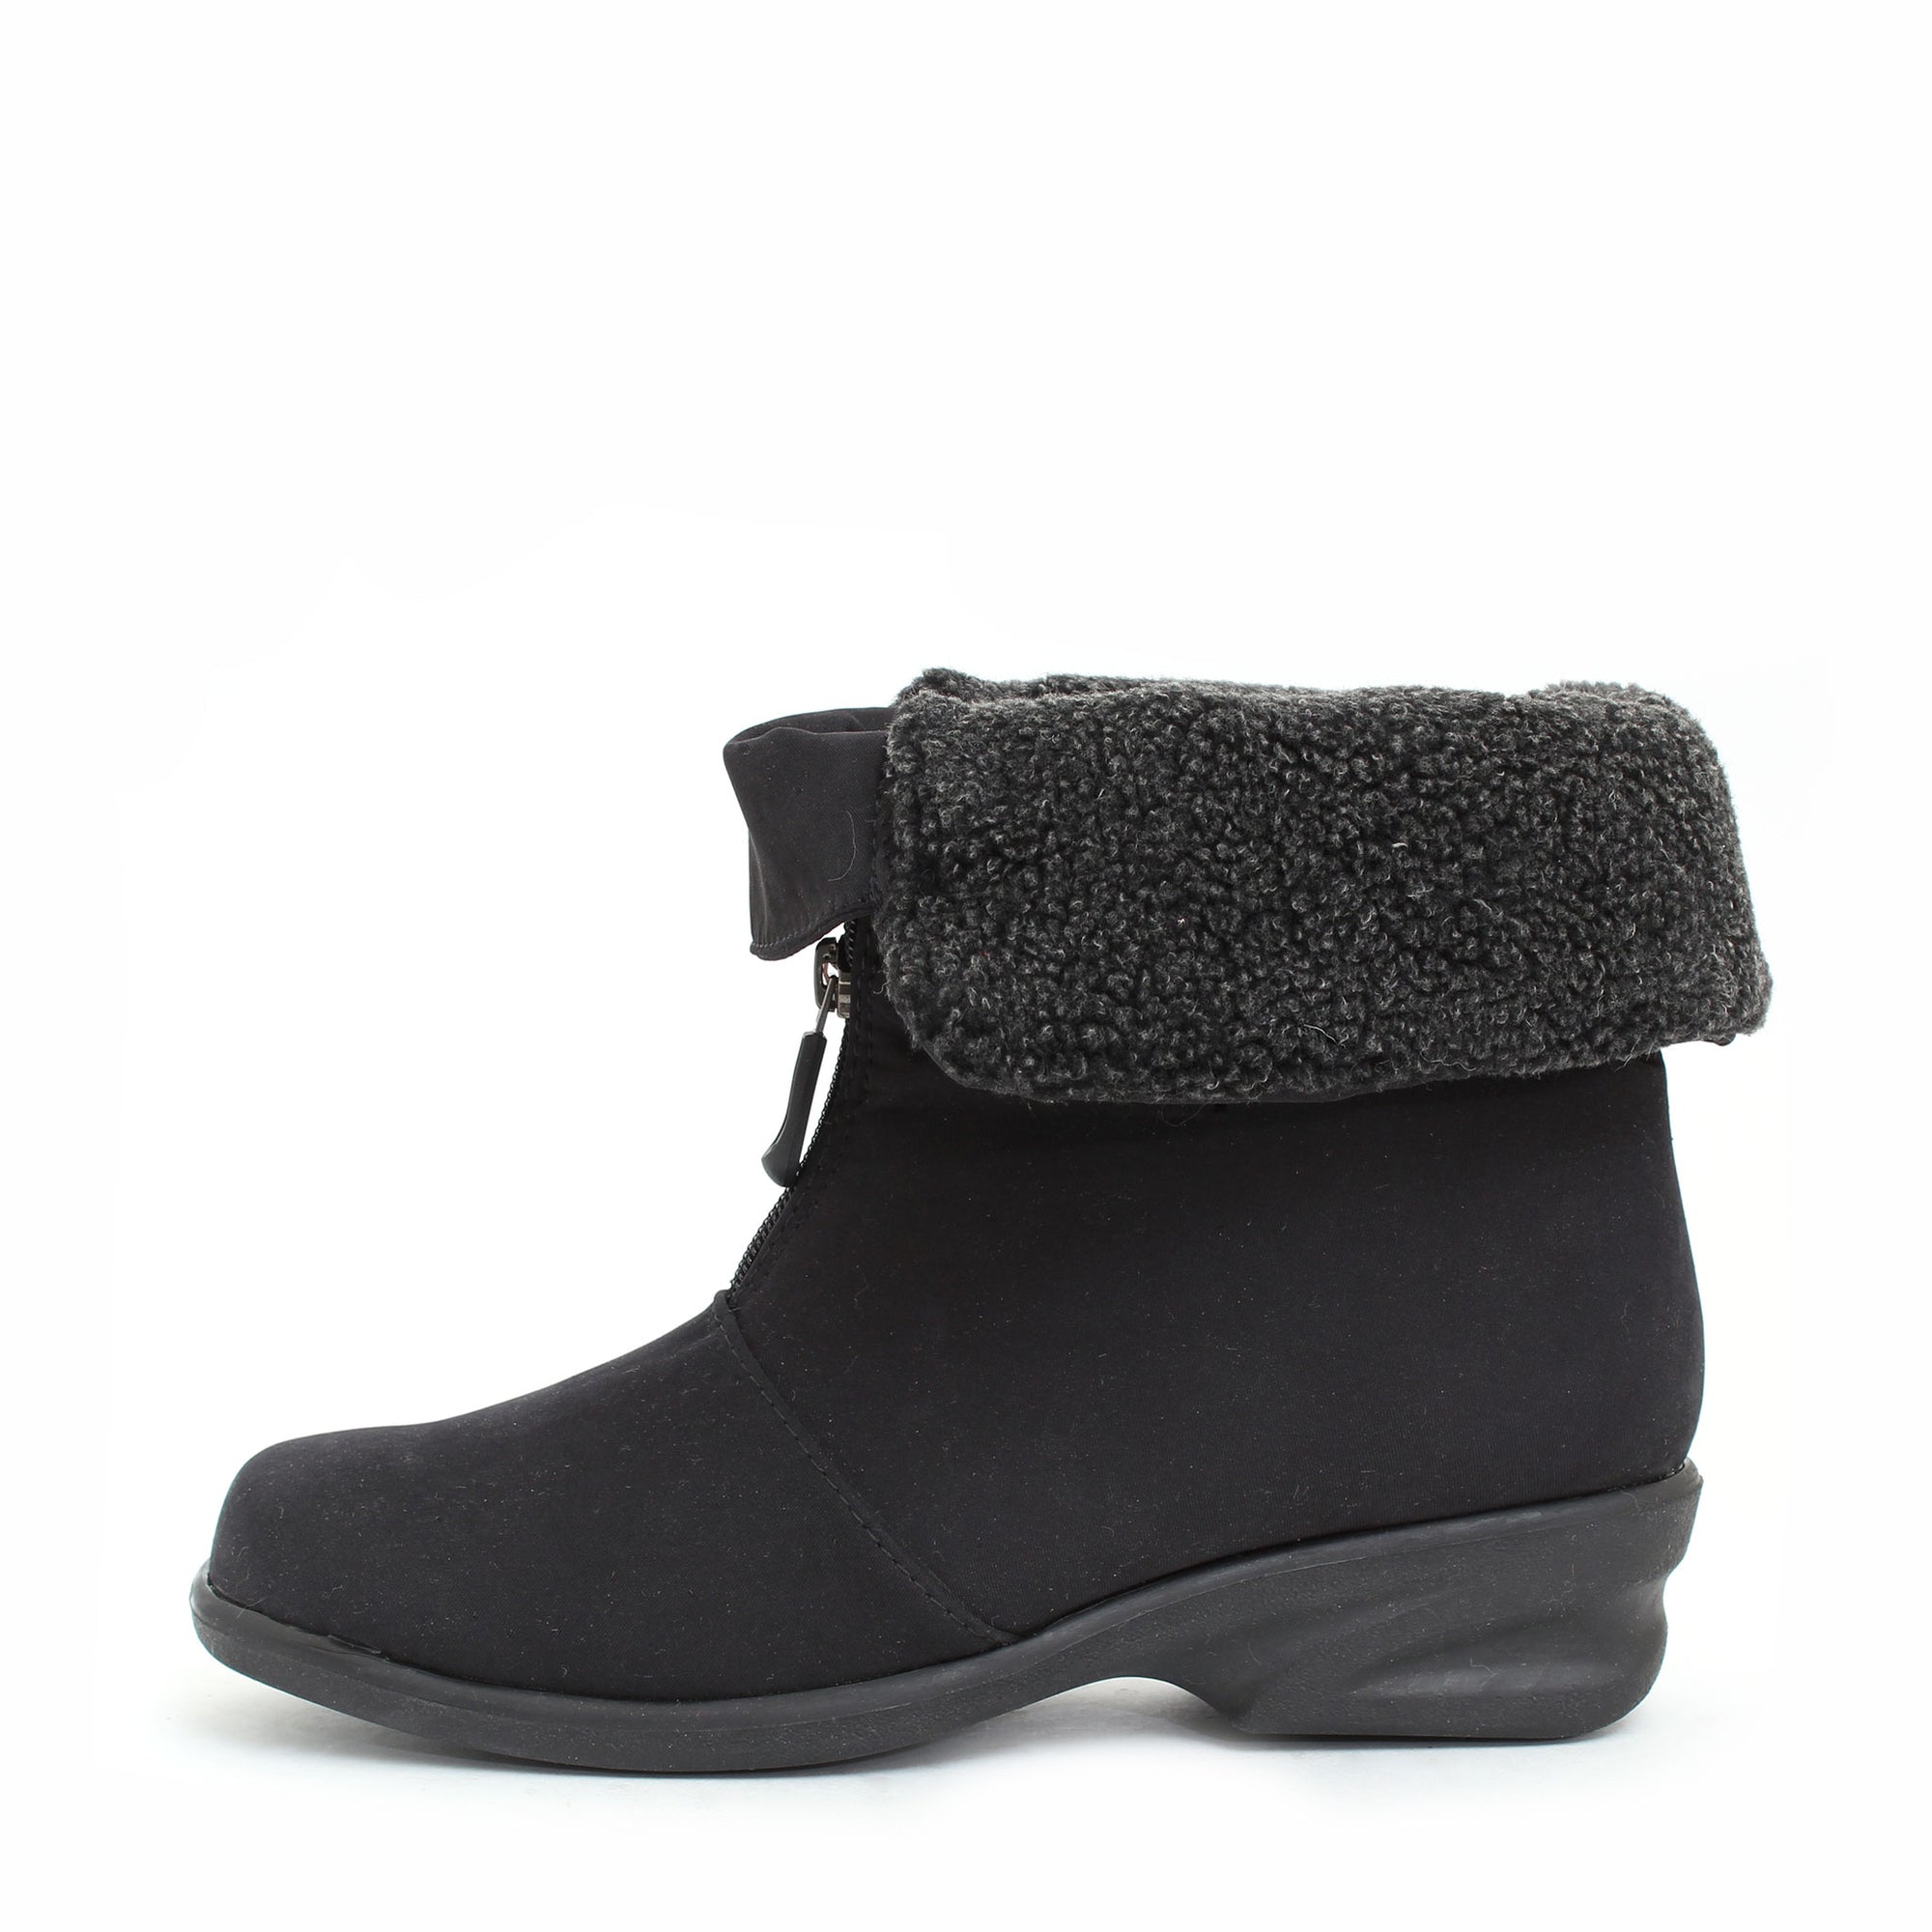 Michelle winter boot for women - Black